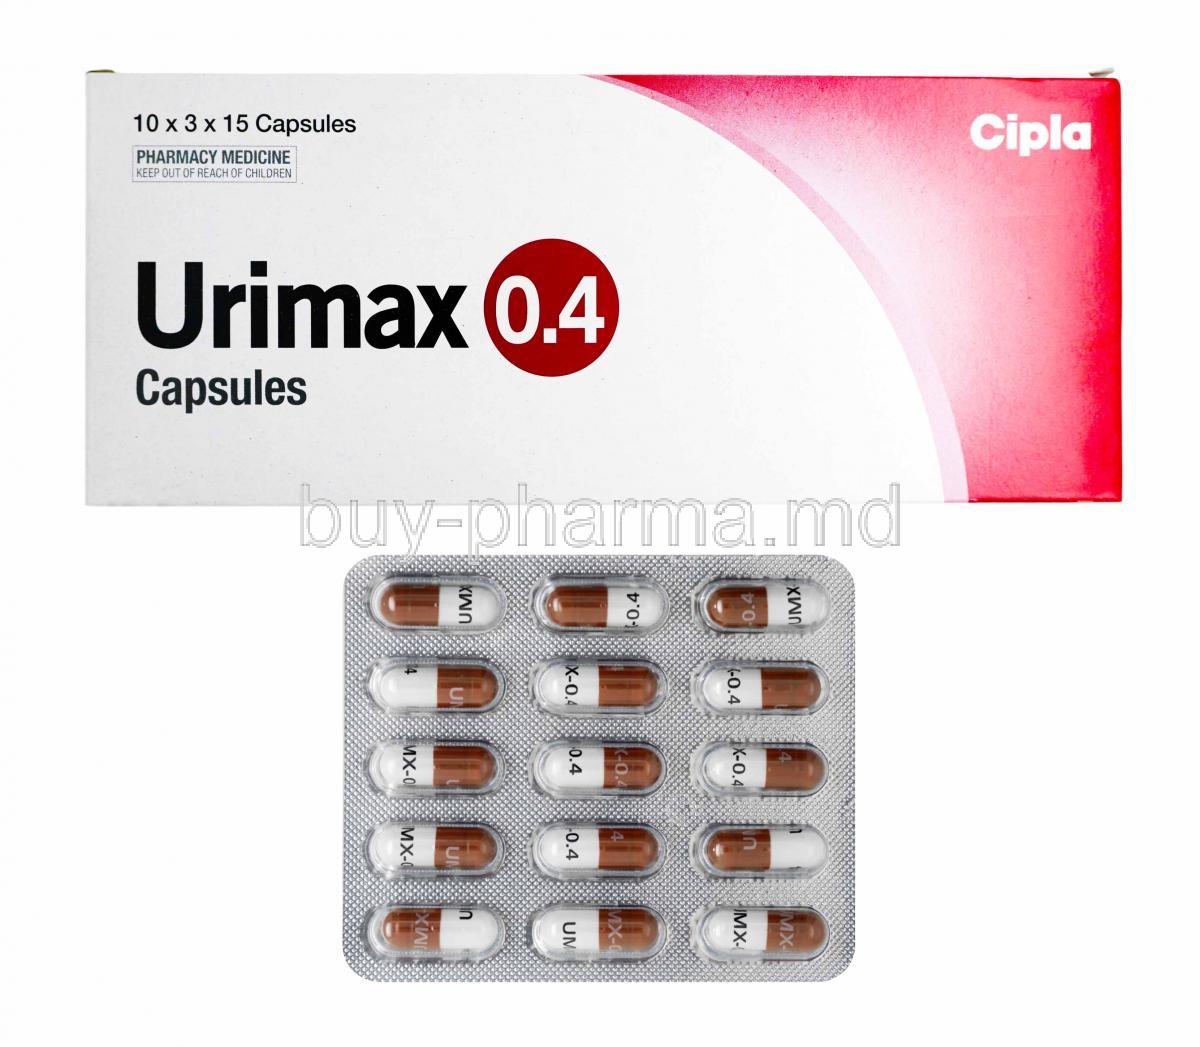 Urimax, Tamsulosin 0.4mg box and capsules